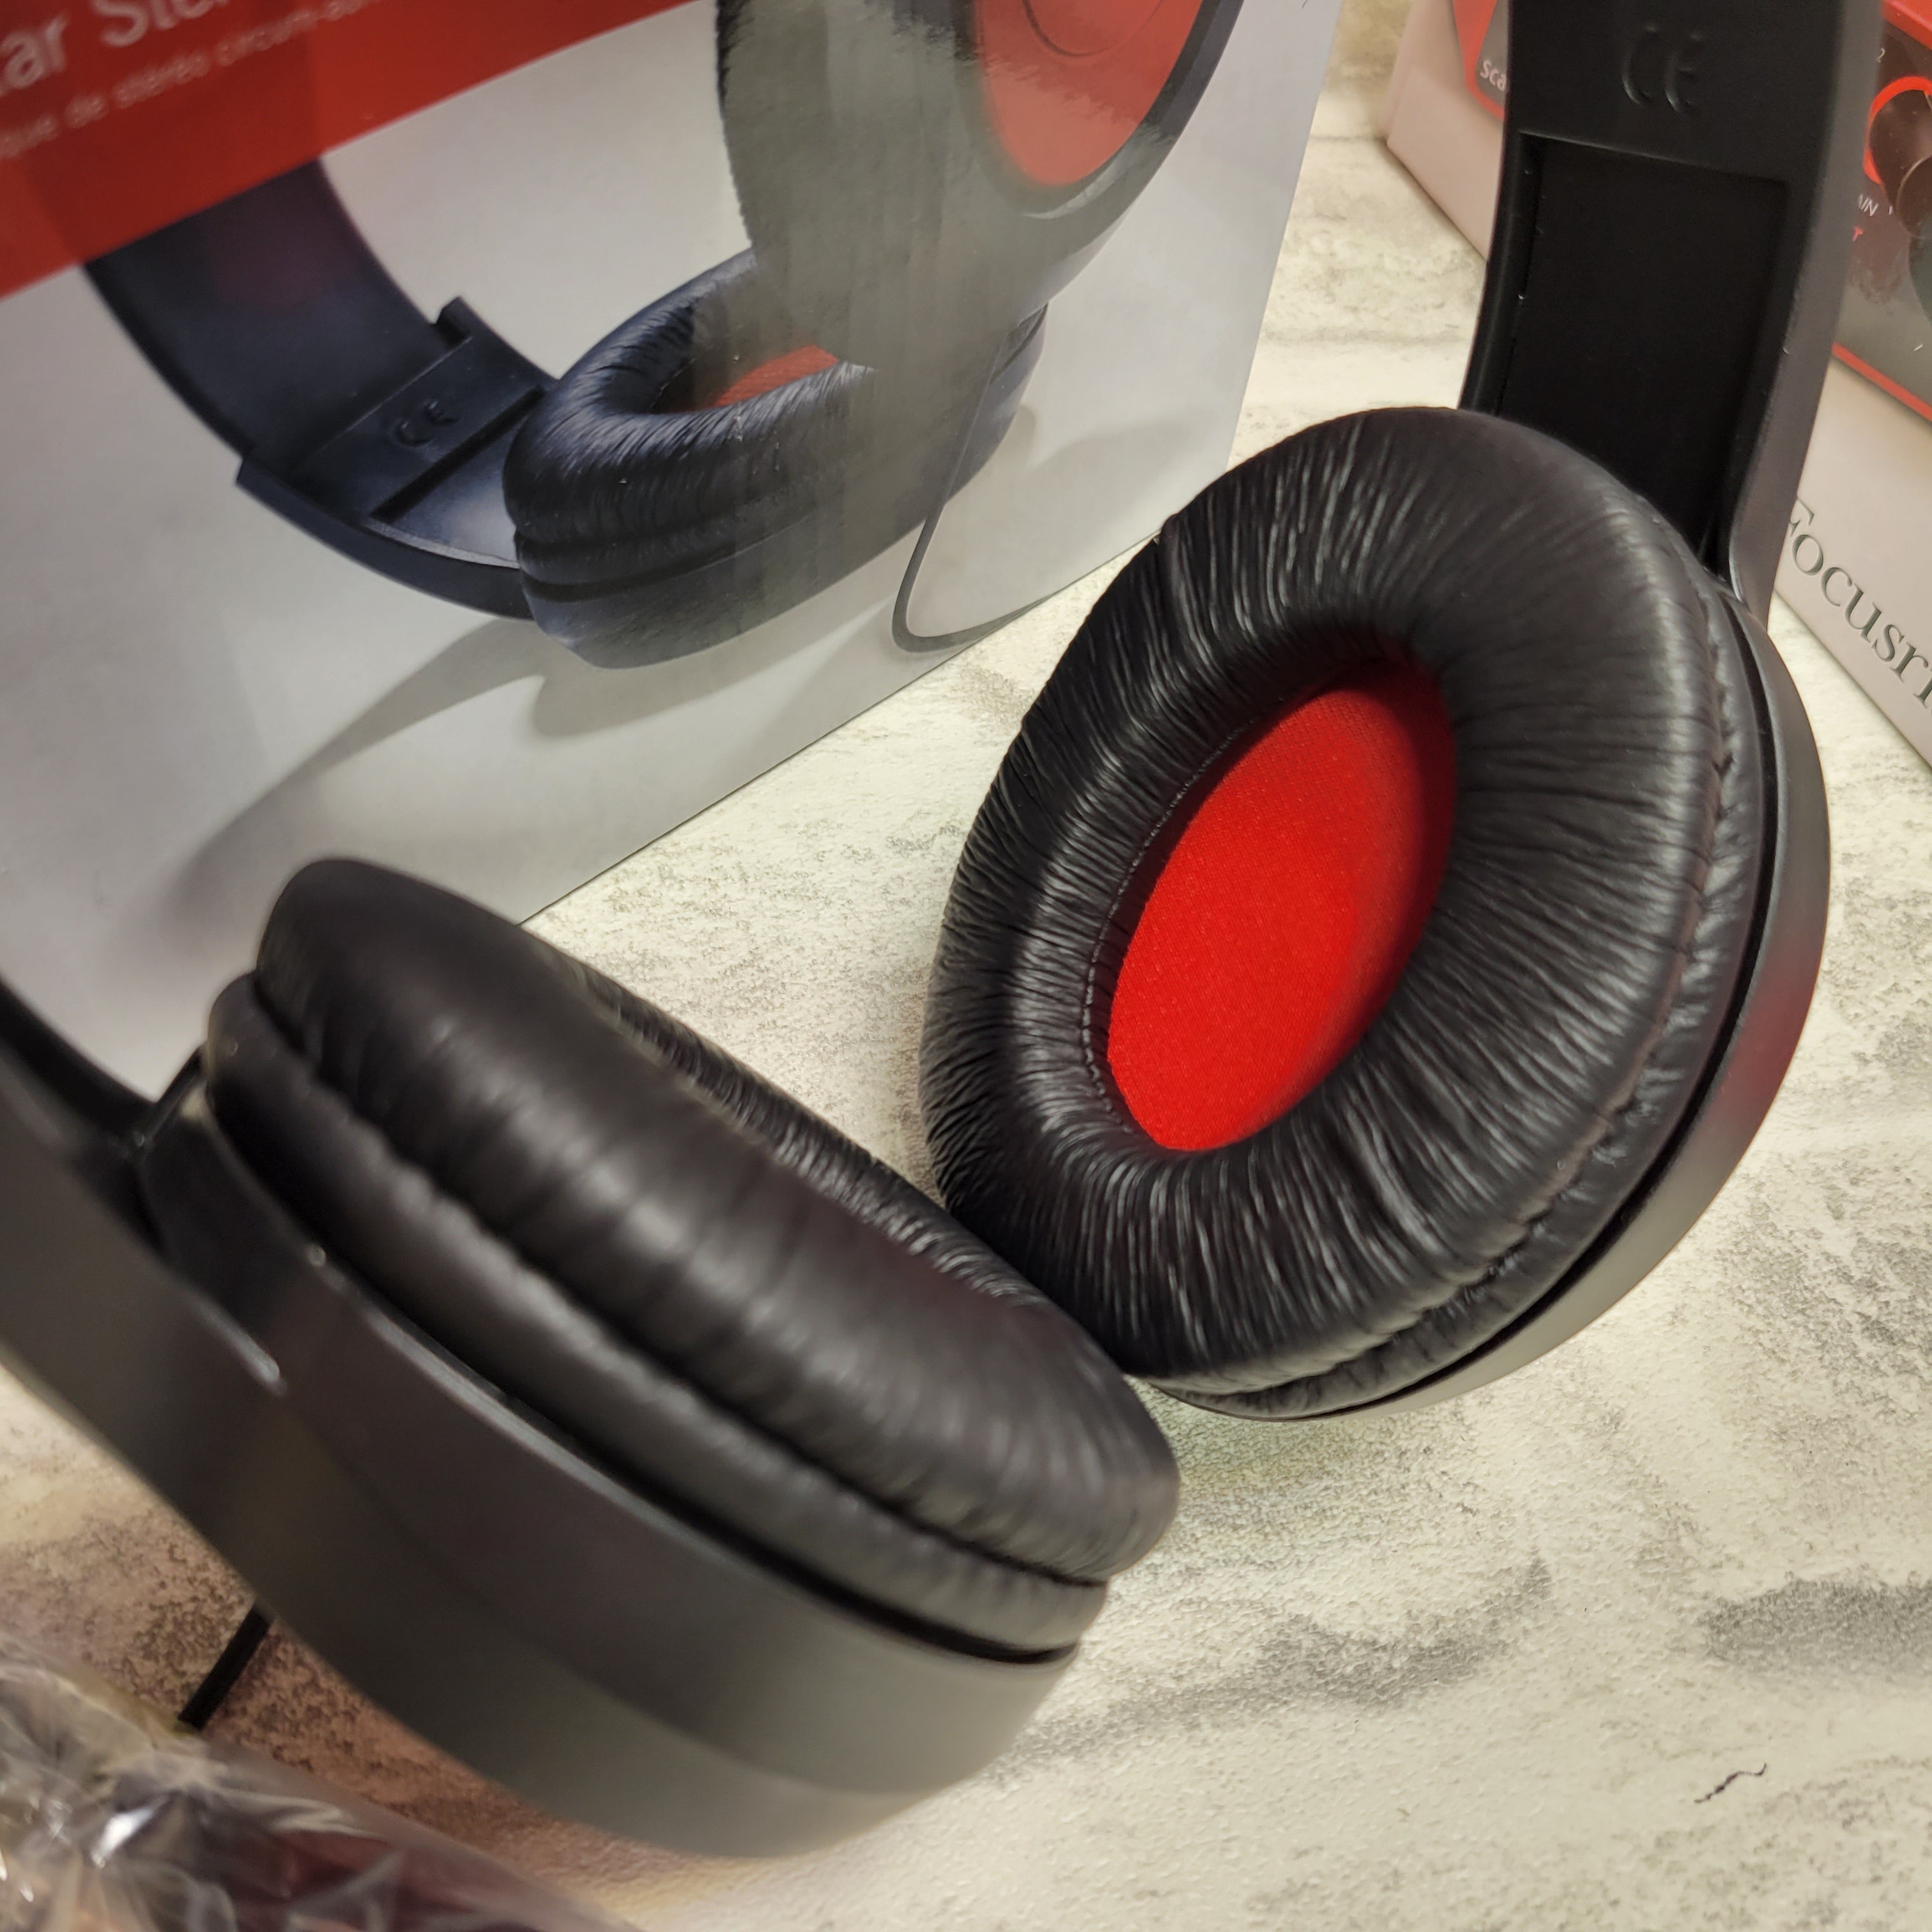 Focusrite Scarlett Solo USB Audio Interface + Samson SR360 Headphones, Cables (7610791067886)